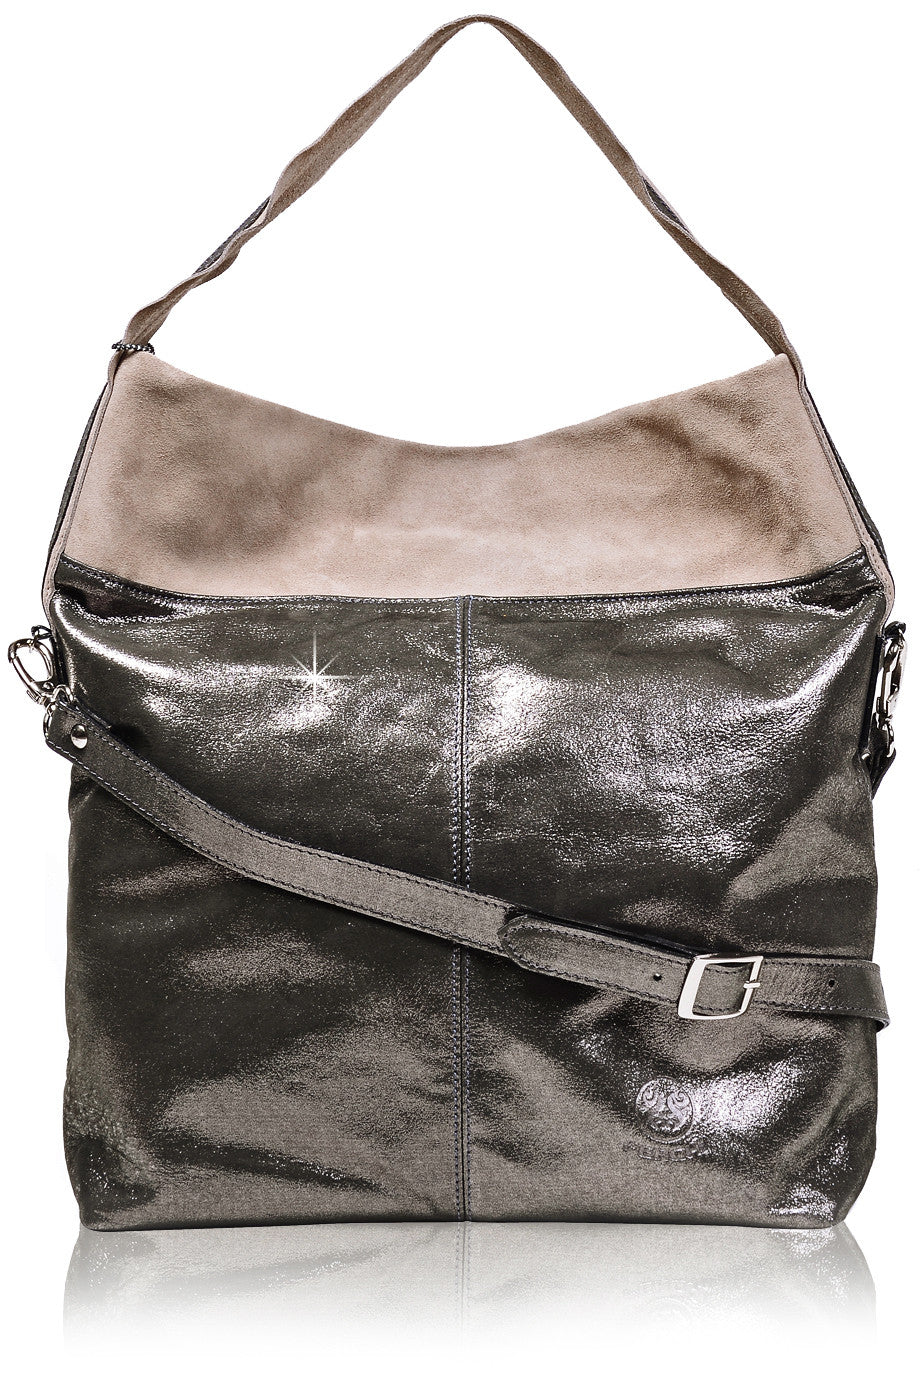 LUINA Dark Charcoal Metallic Shoulder Bag